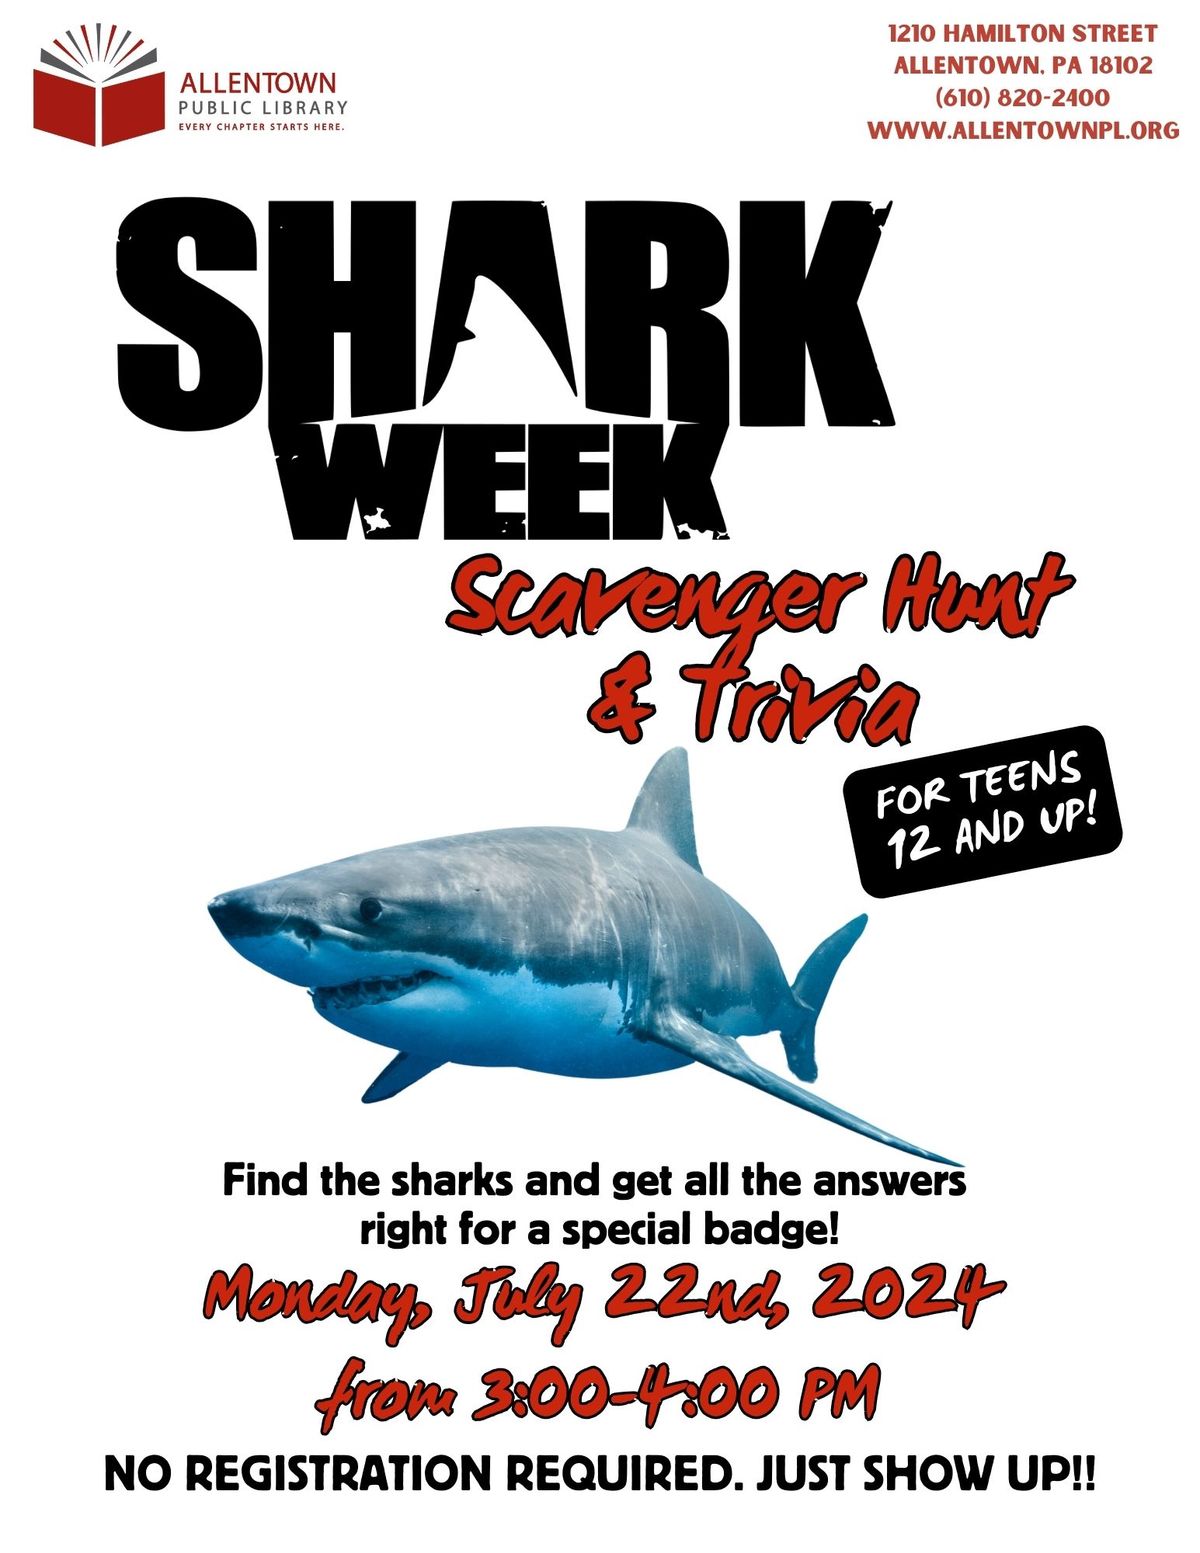 Shark Week Trivia and Scavenger Hunt (Teen Time)